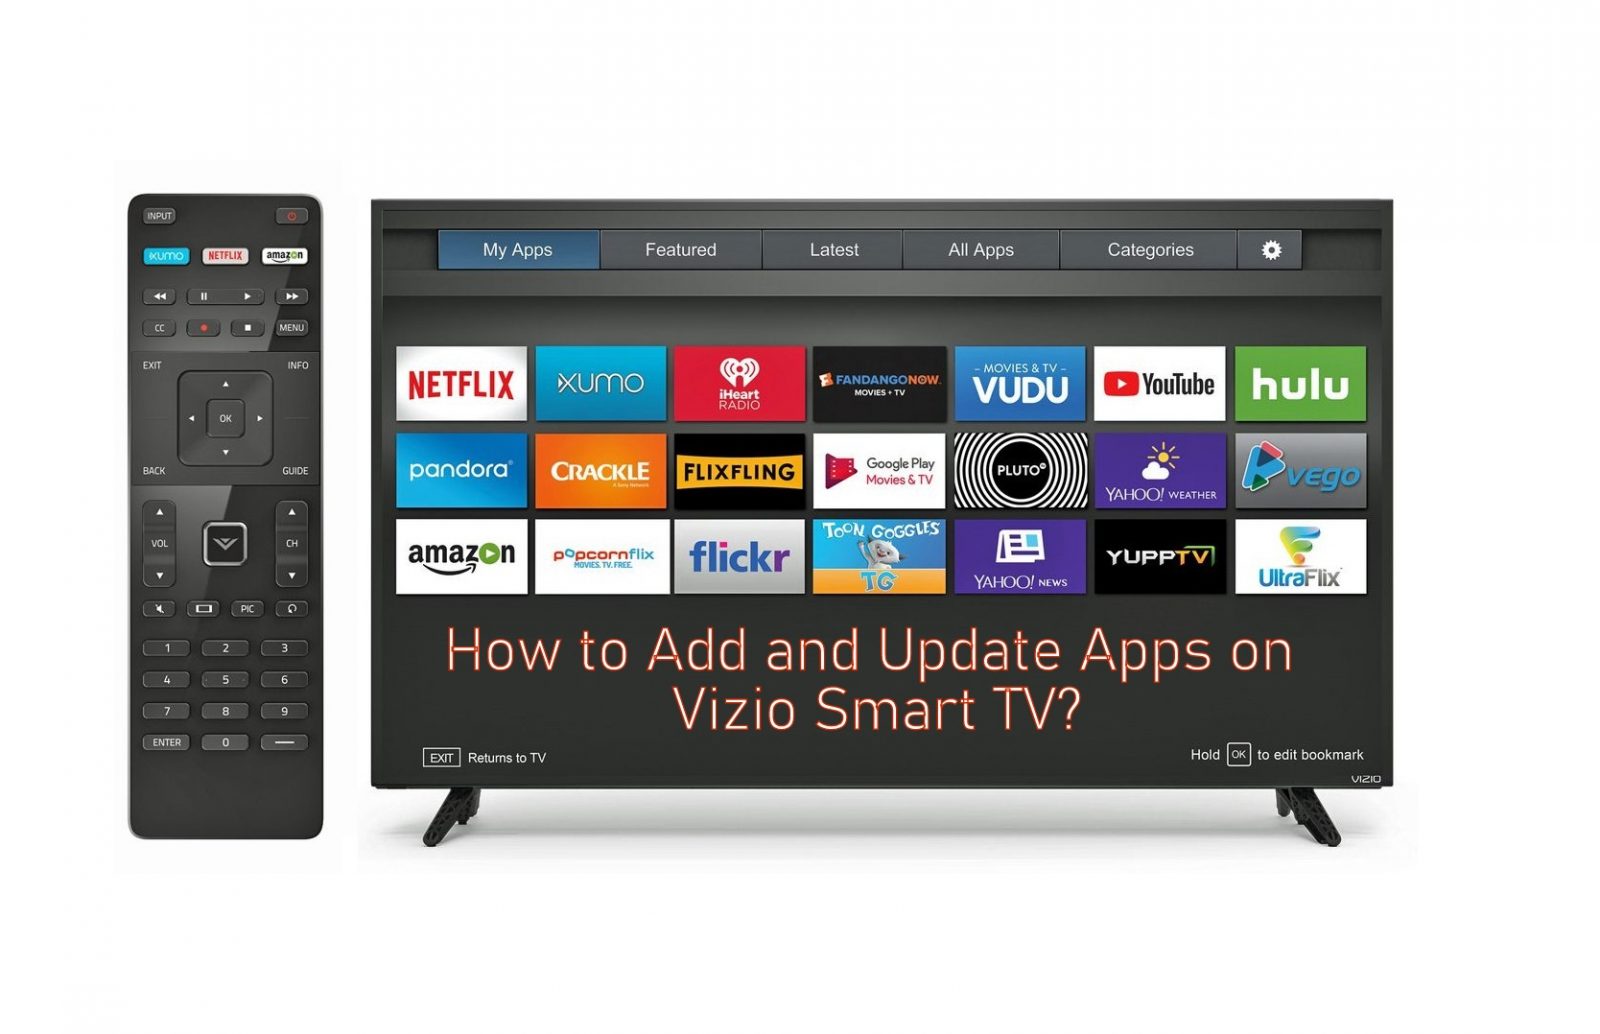 how to download philo on vizio smart tv